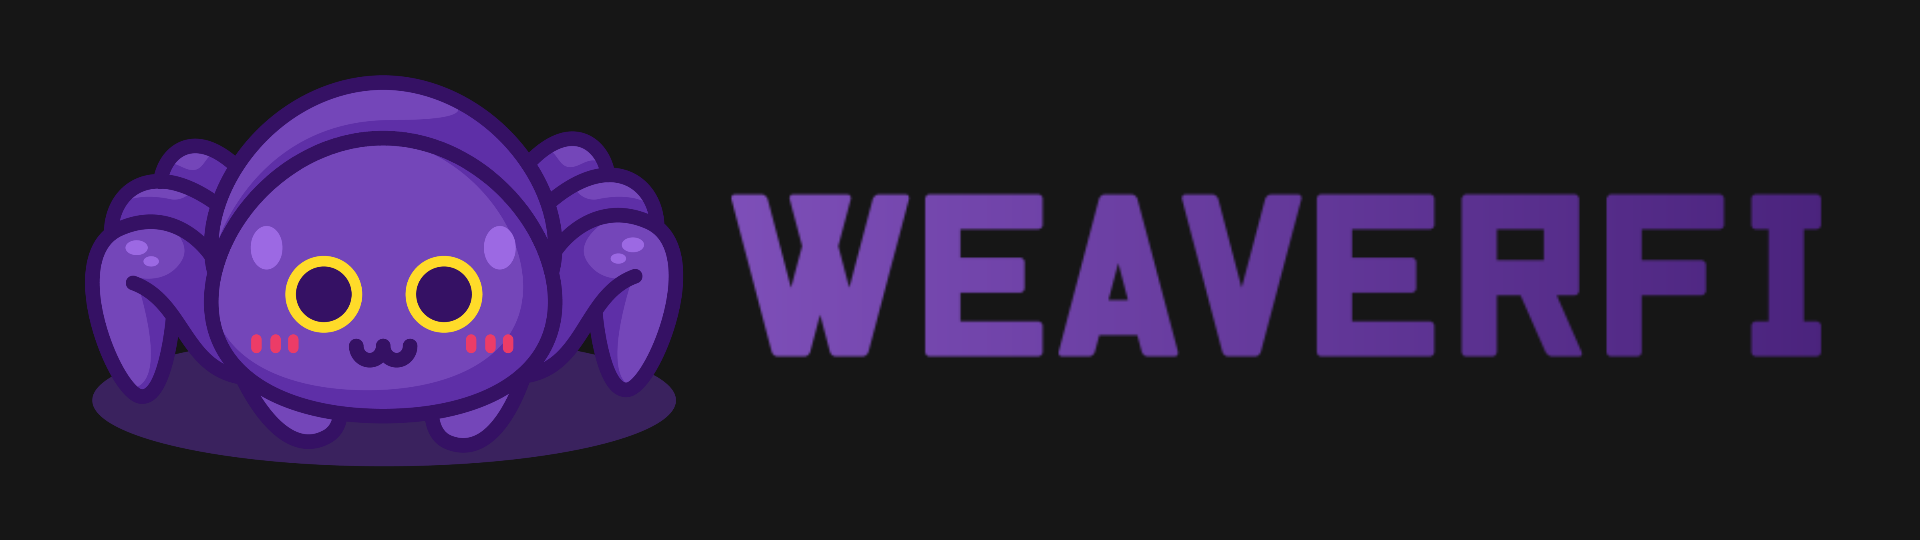 WeaverFi Banner